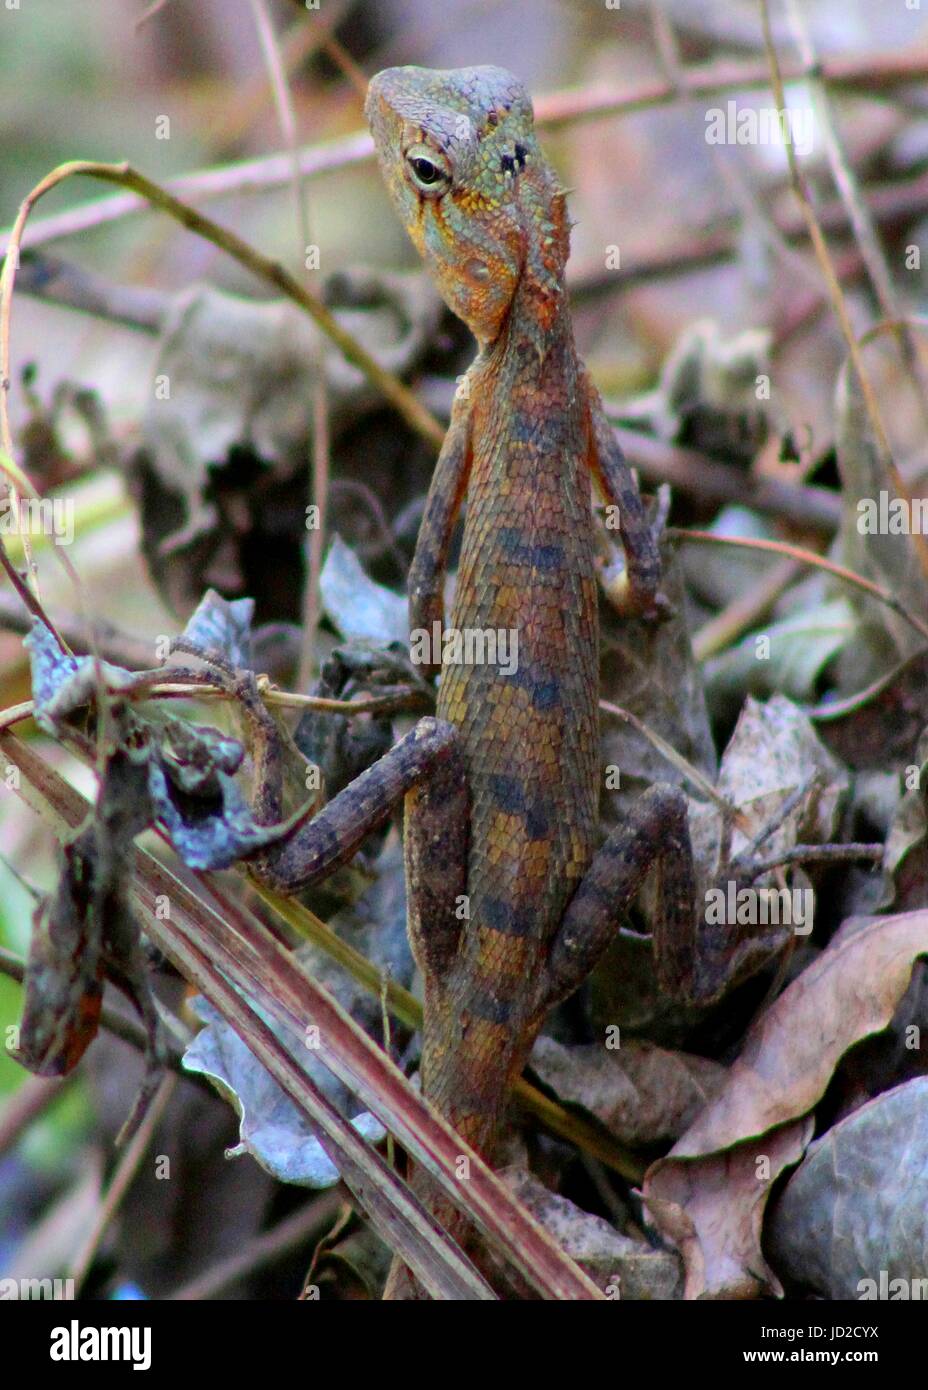 Garden lizard / tree lizard in Sri Lanka Stock Photo